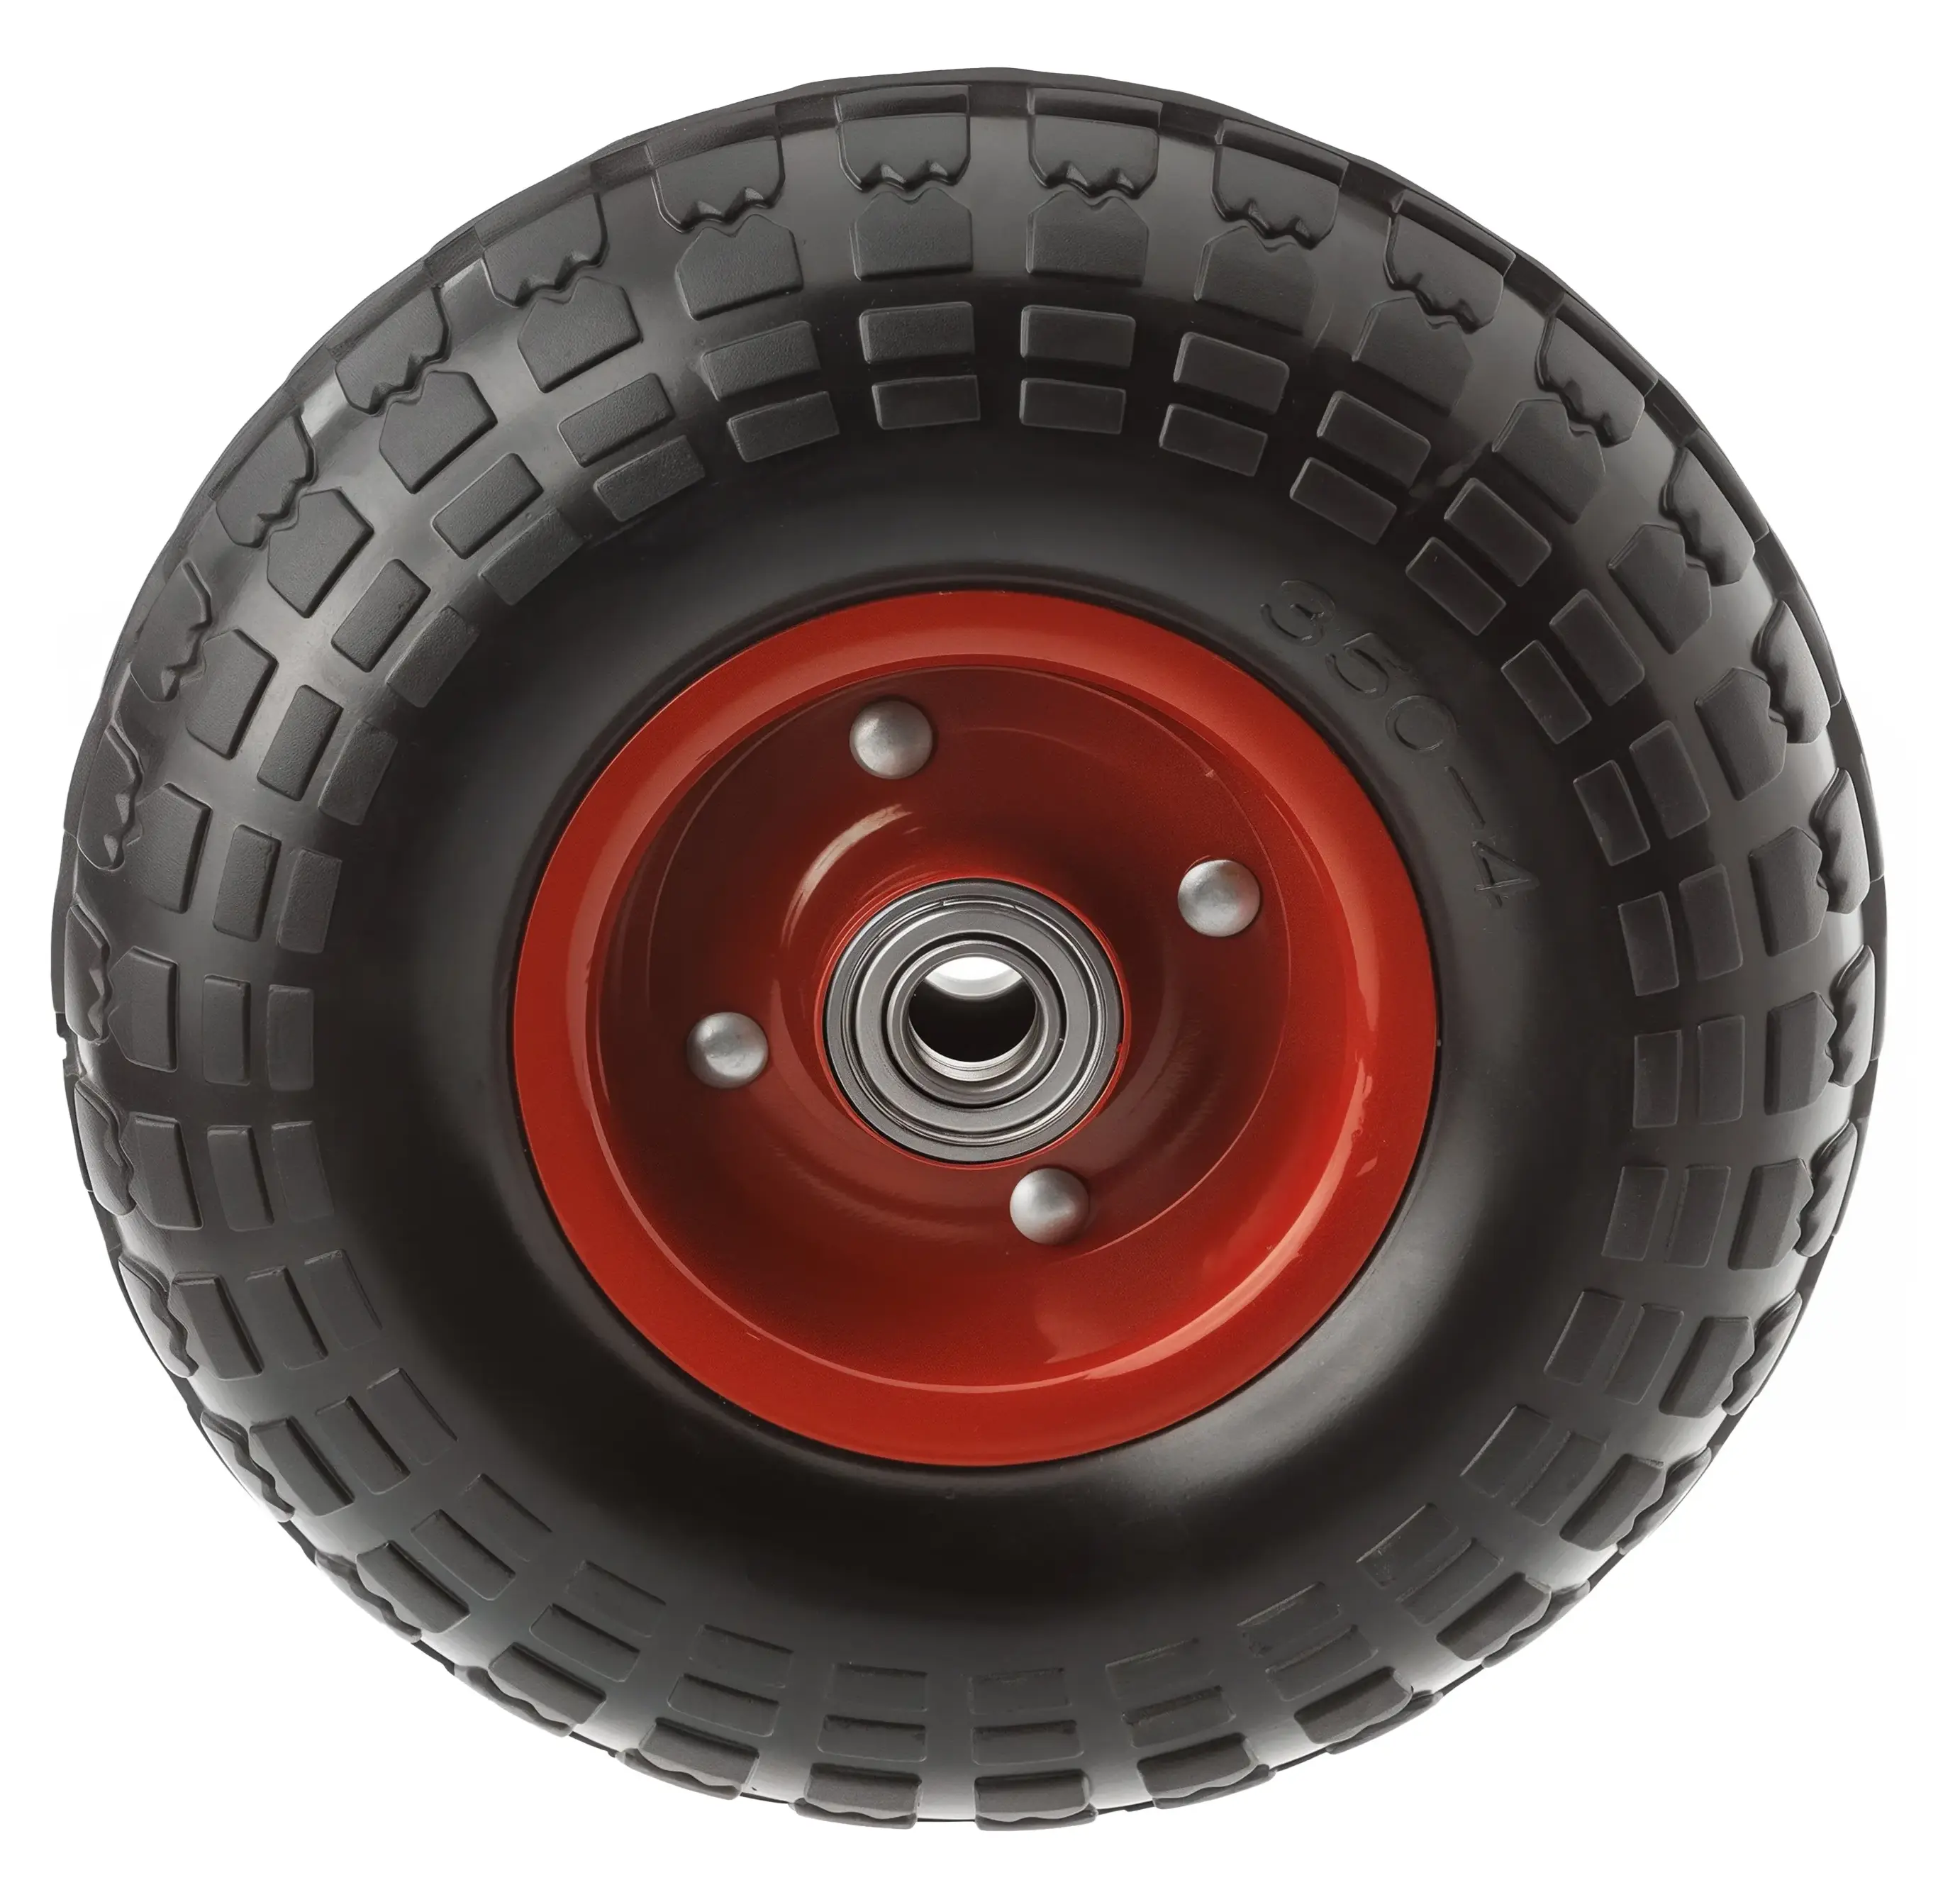 PP 250 - Литое колесо с протект. резиной 250 мм без крепл. (шарикоподш., мет. обод)